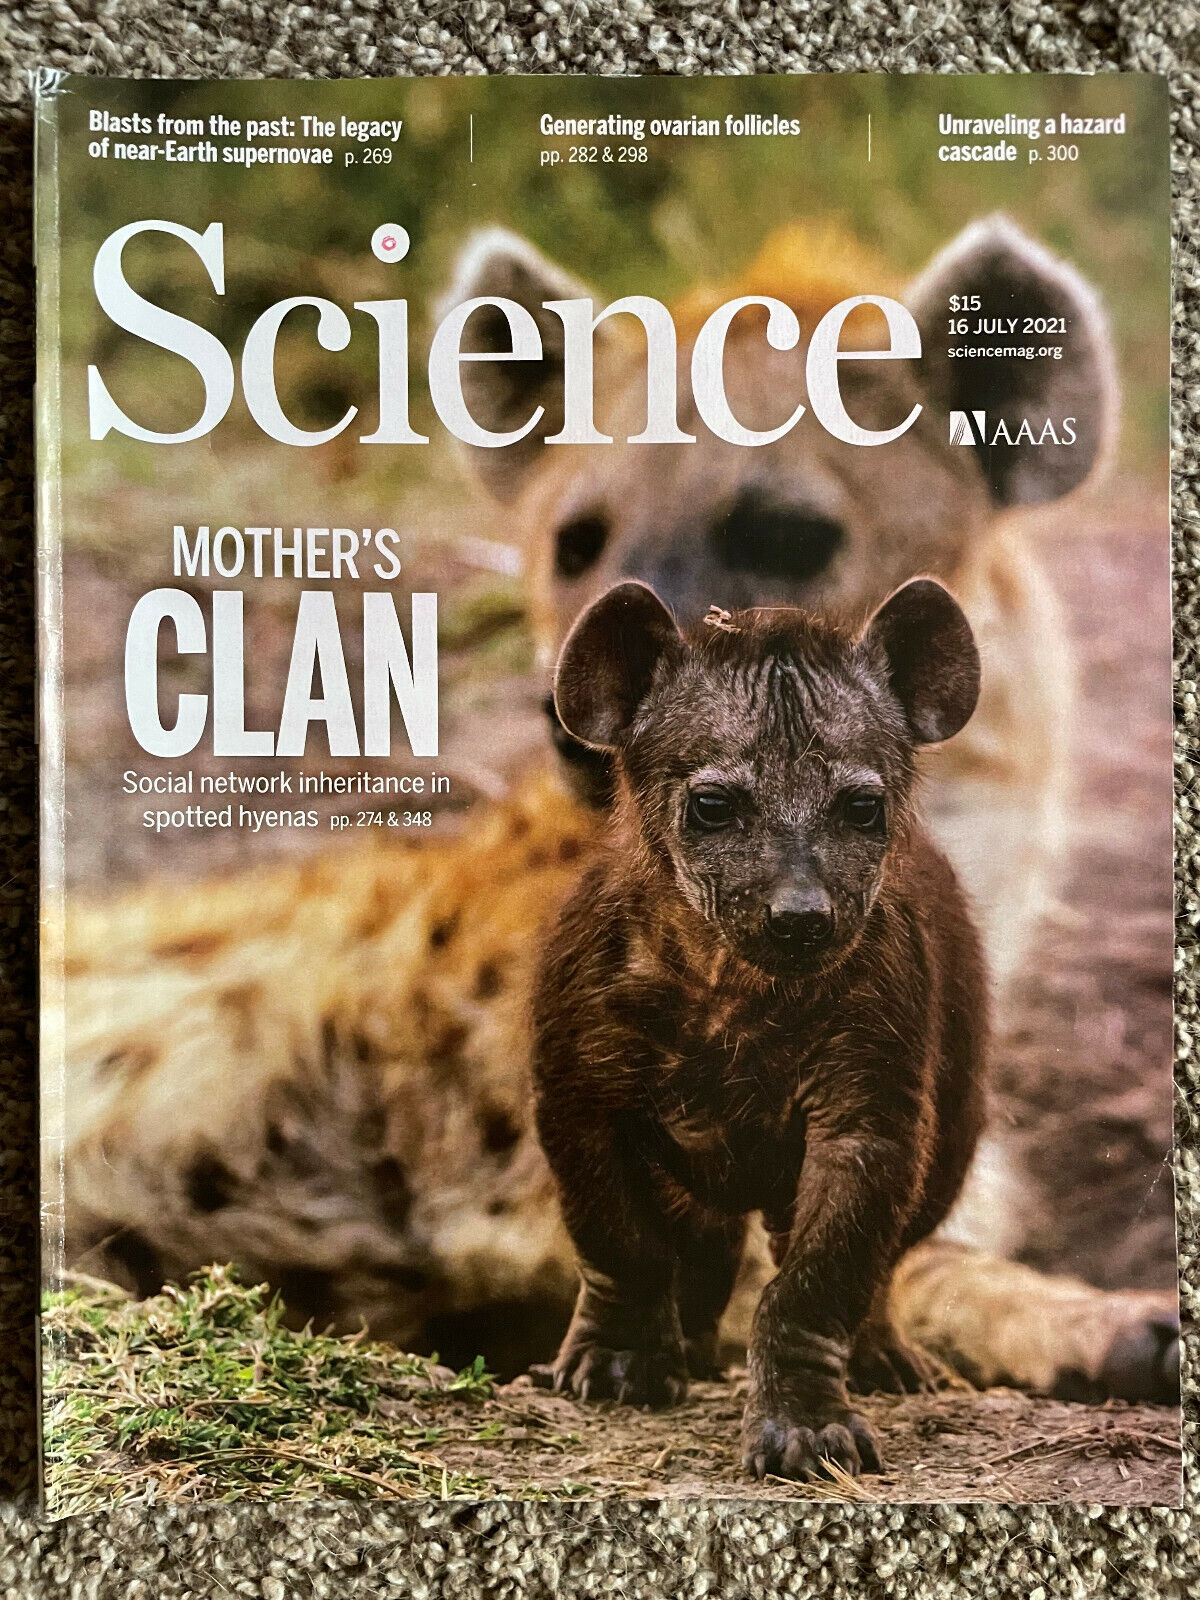 SCIENCE Magazine July 16 2021 Spotted Hyenas Ovarian Follicles Supernovae